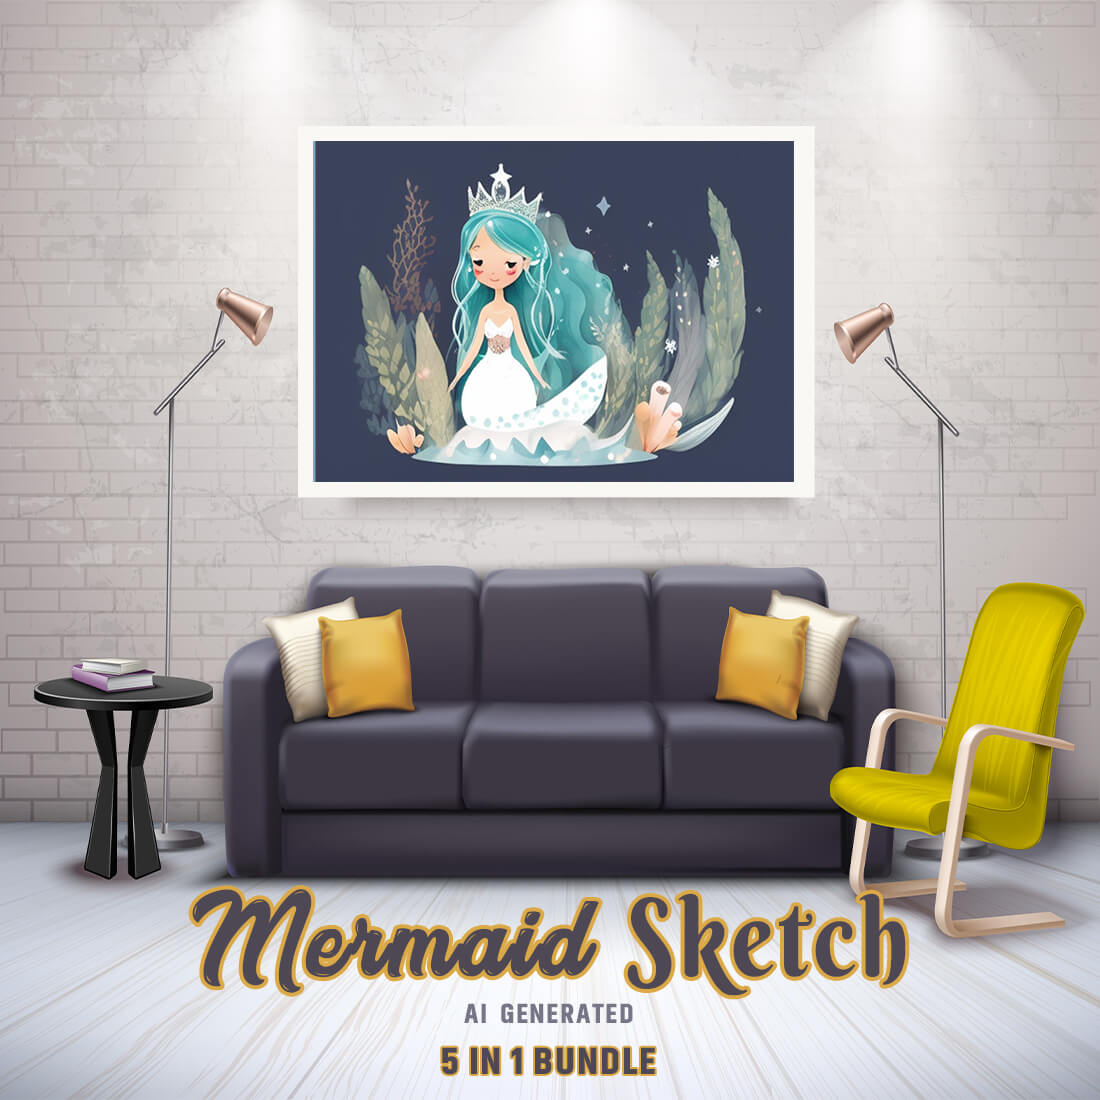 Free Creative & Cute Mermaid Watercolor Painting Art Vol 15 cover image.